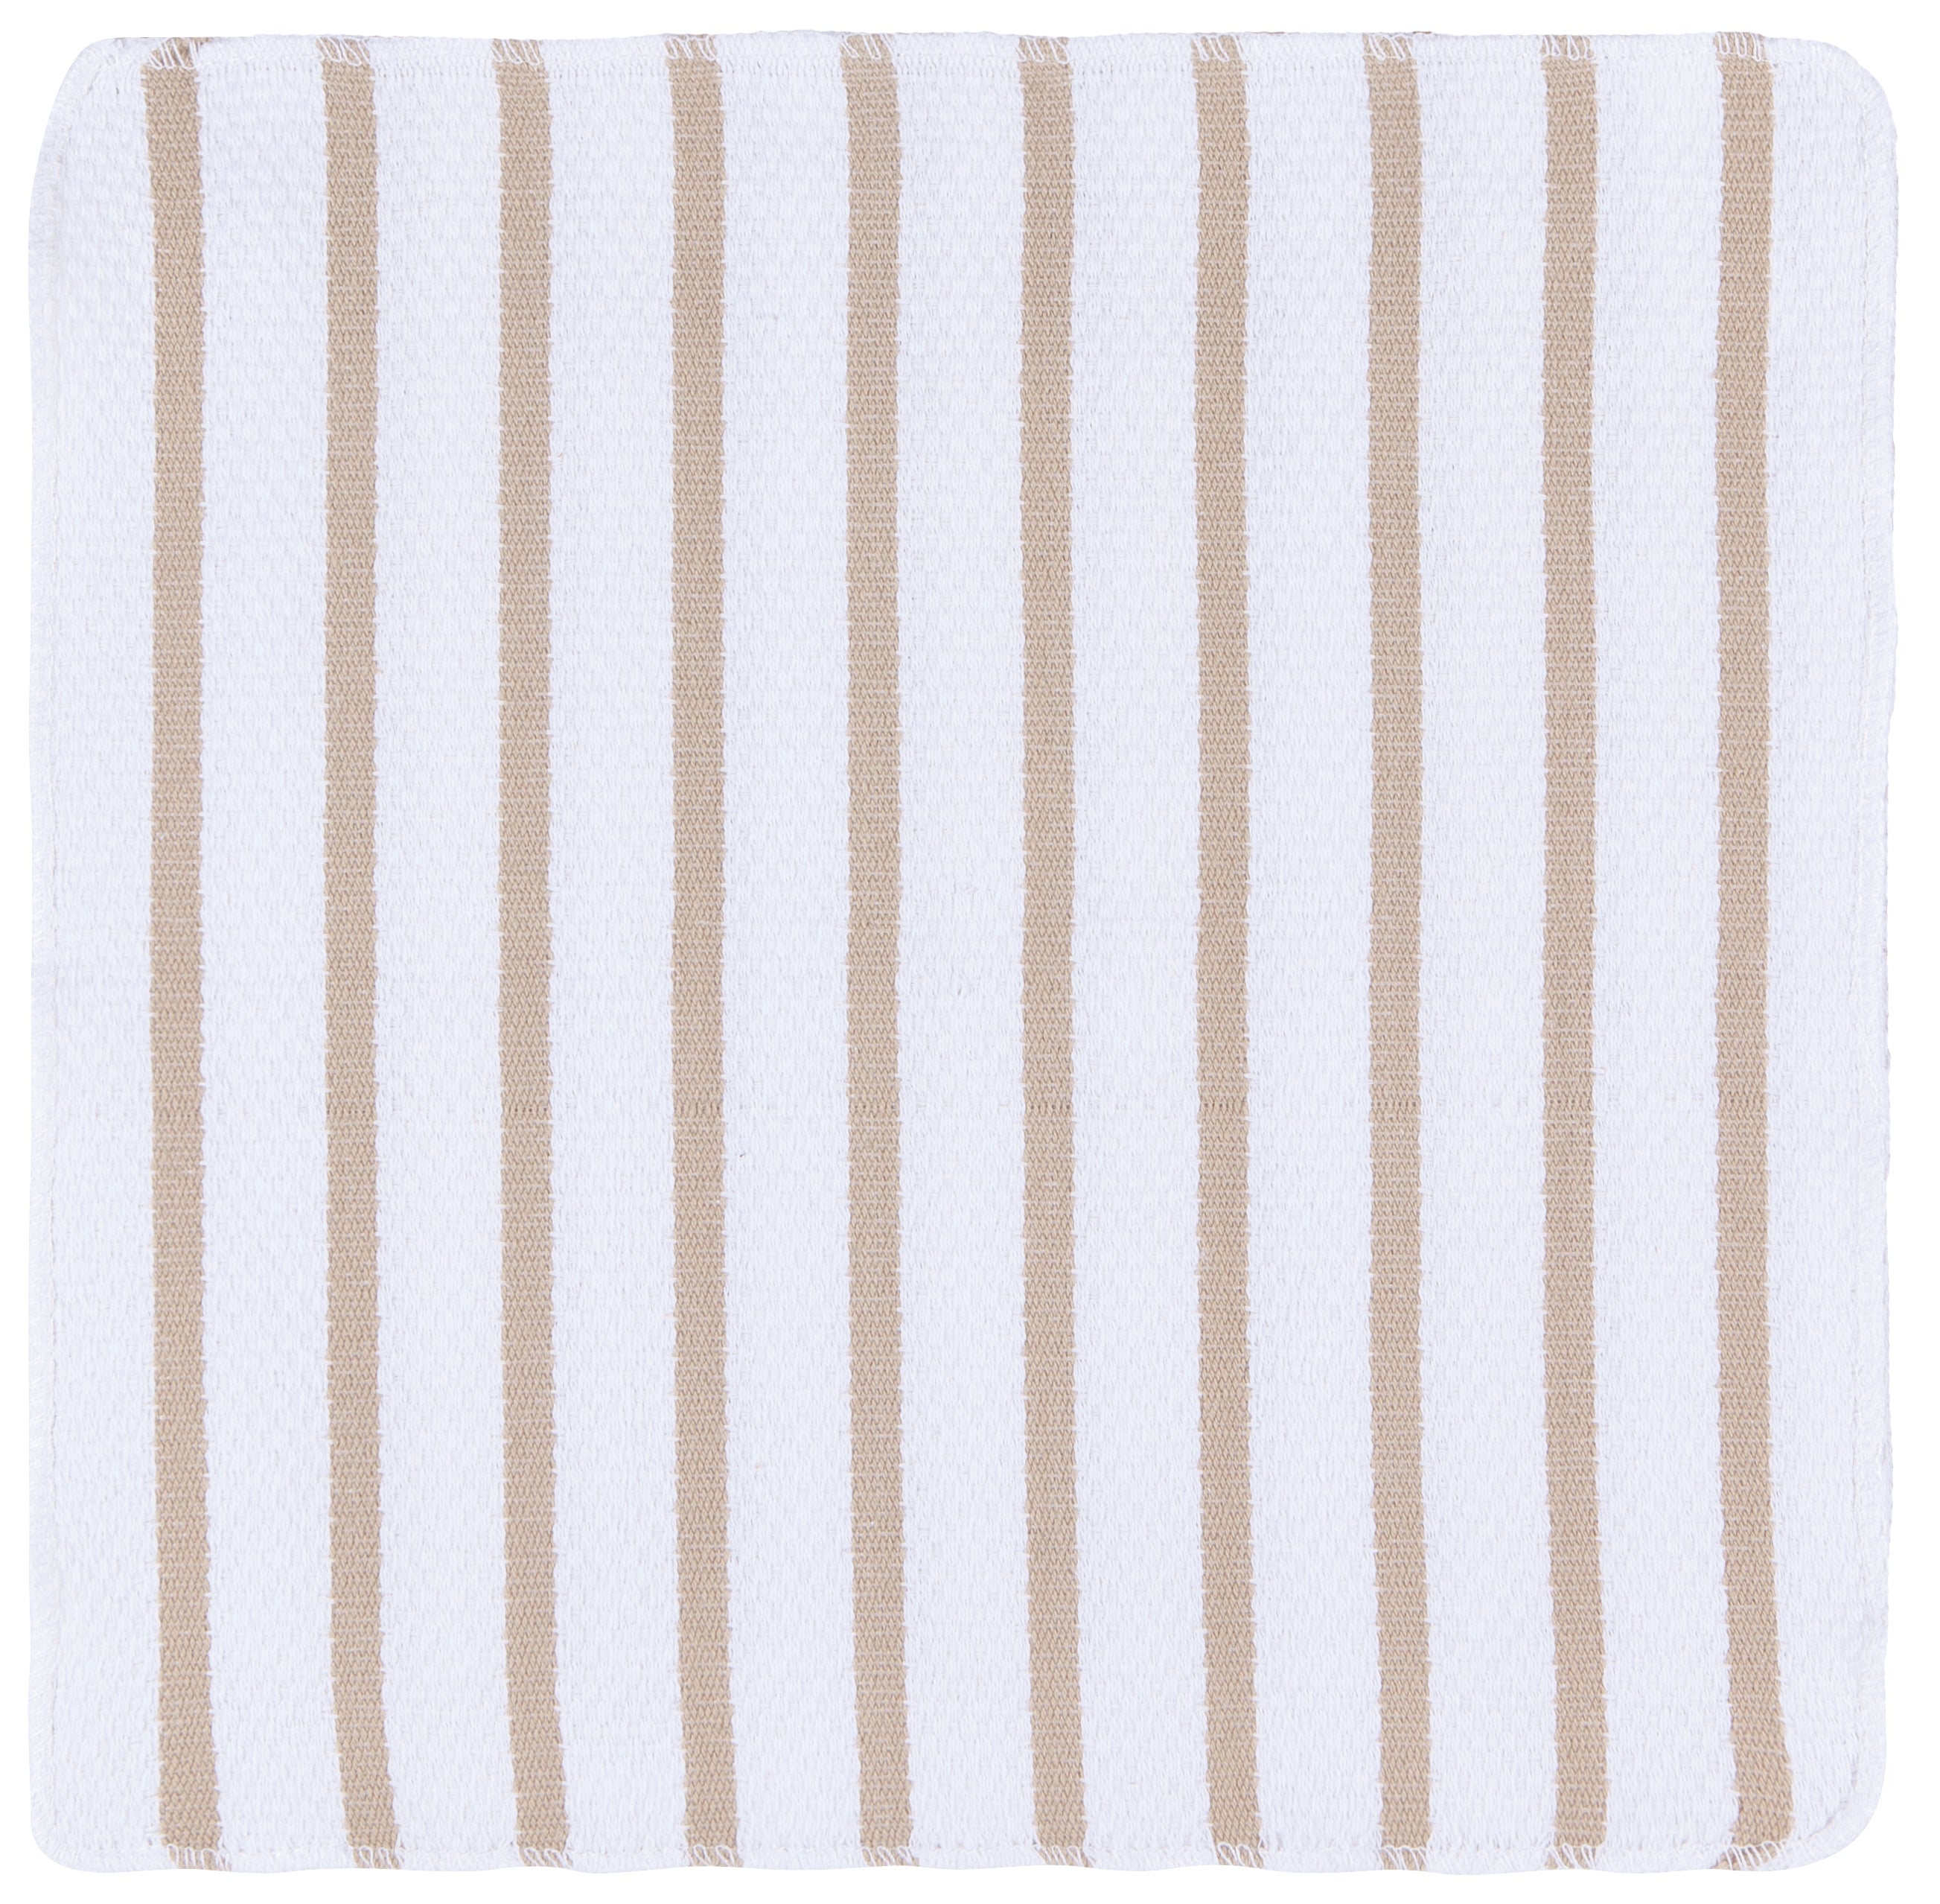 (White / Sandstone) -- Basketweave Dishcloths, Set of 2  by Now Designs®